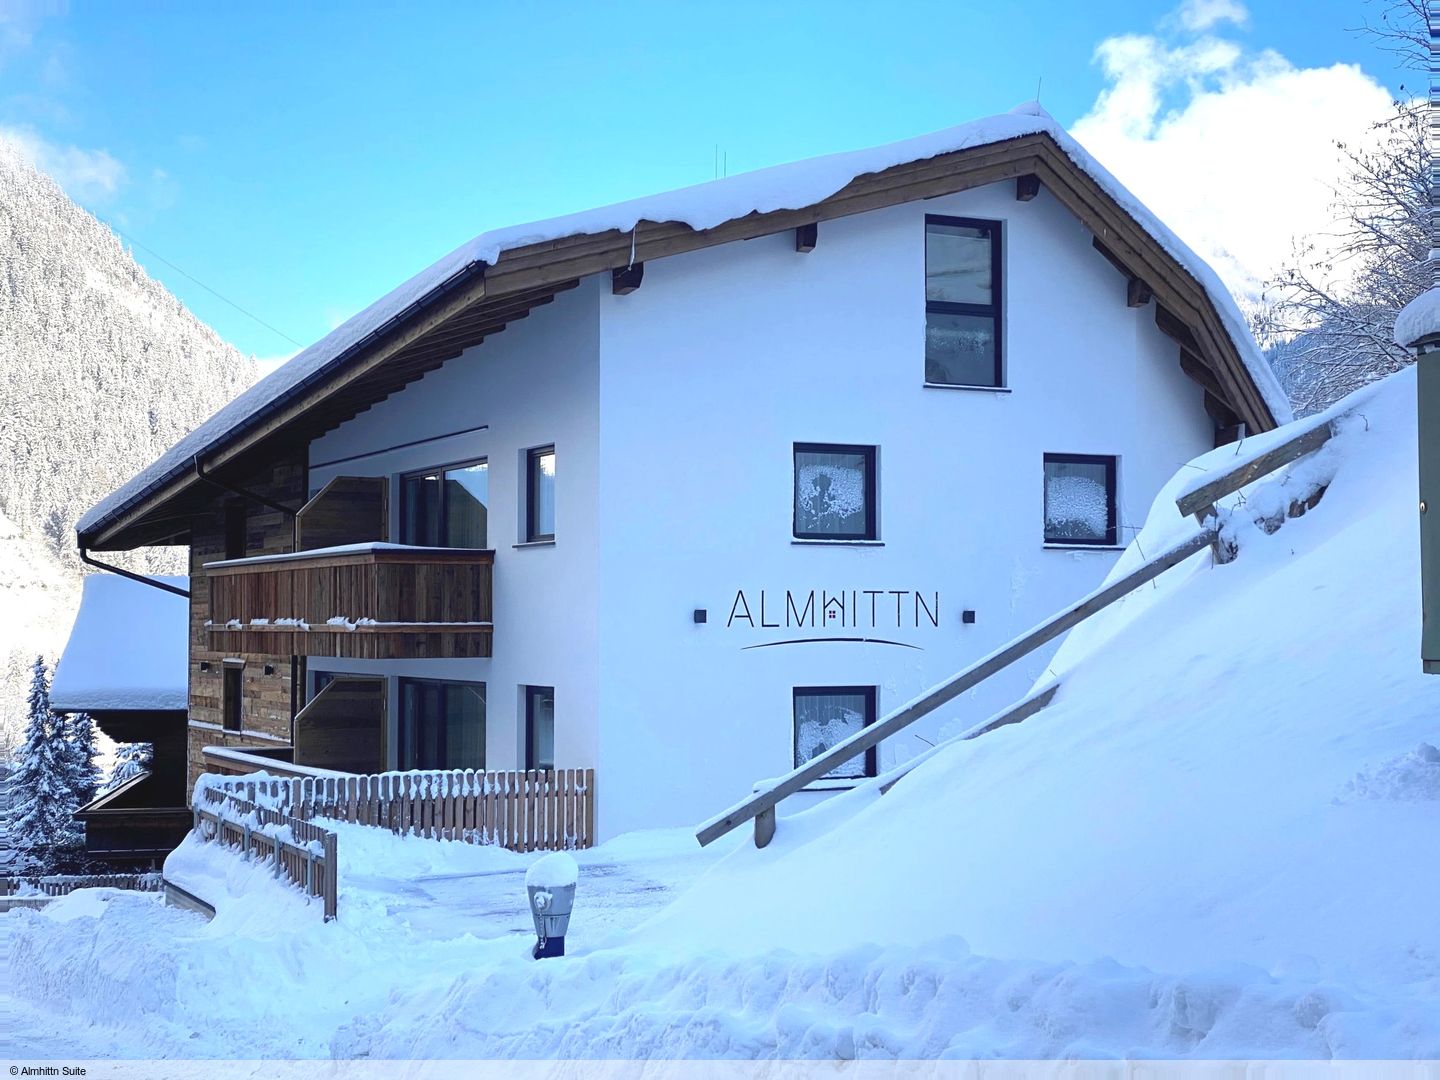 Almhittn Suites günstig / Mayrhofen (Zillertal) Last-Minute